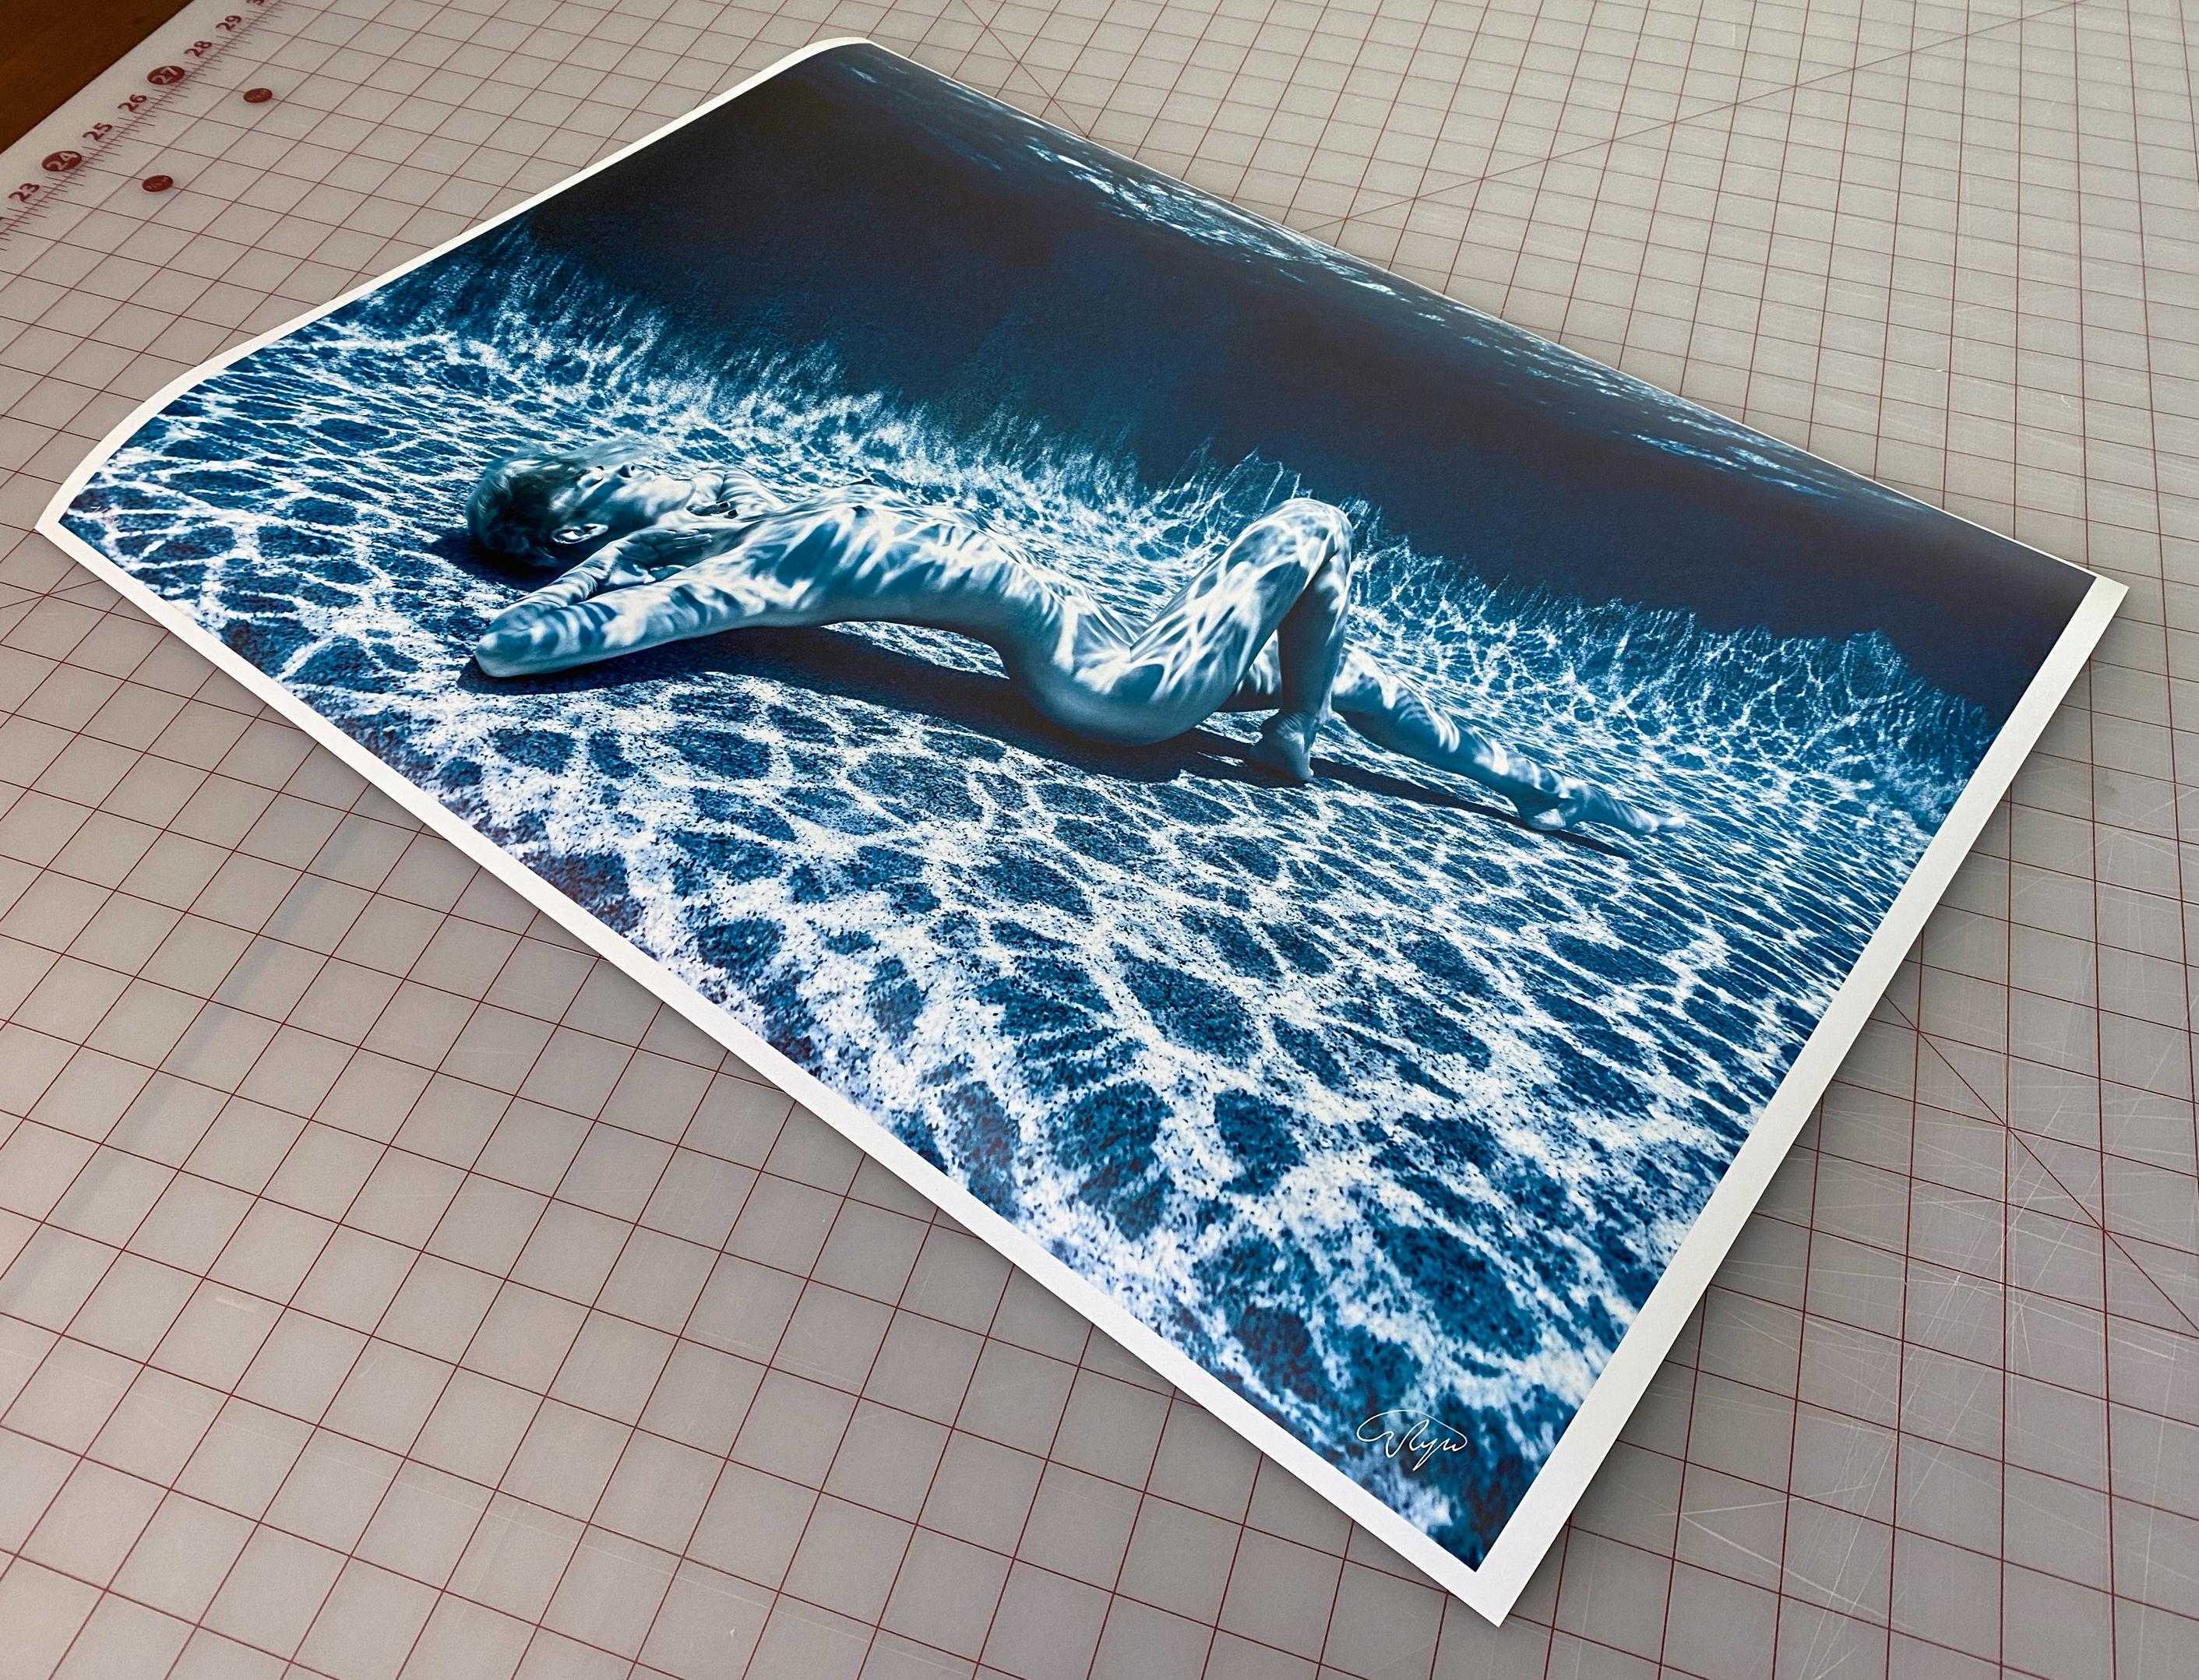 Moonlight - underwater nude photograph - archival pigment print 18x24